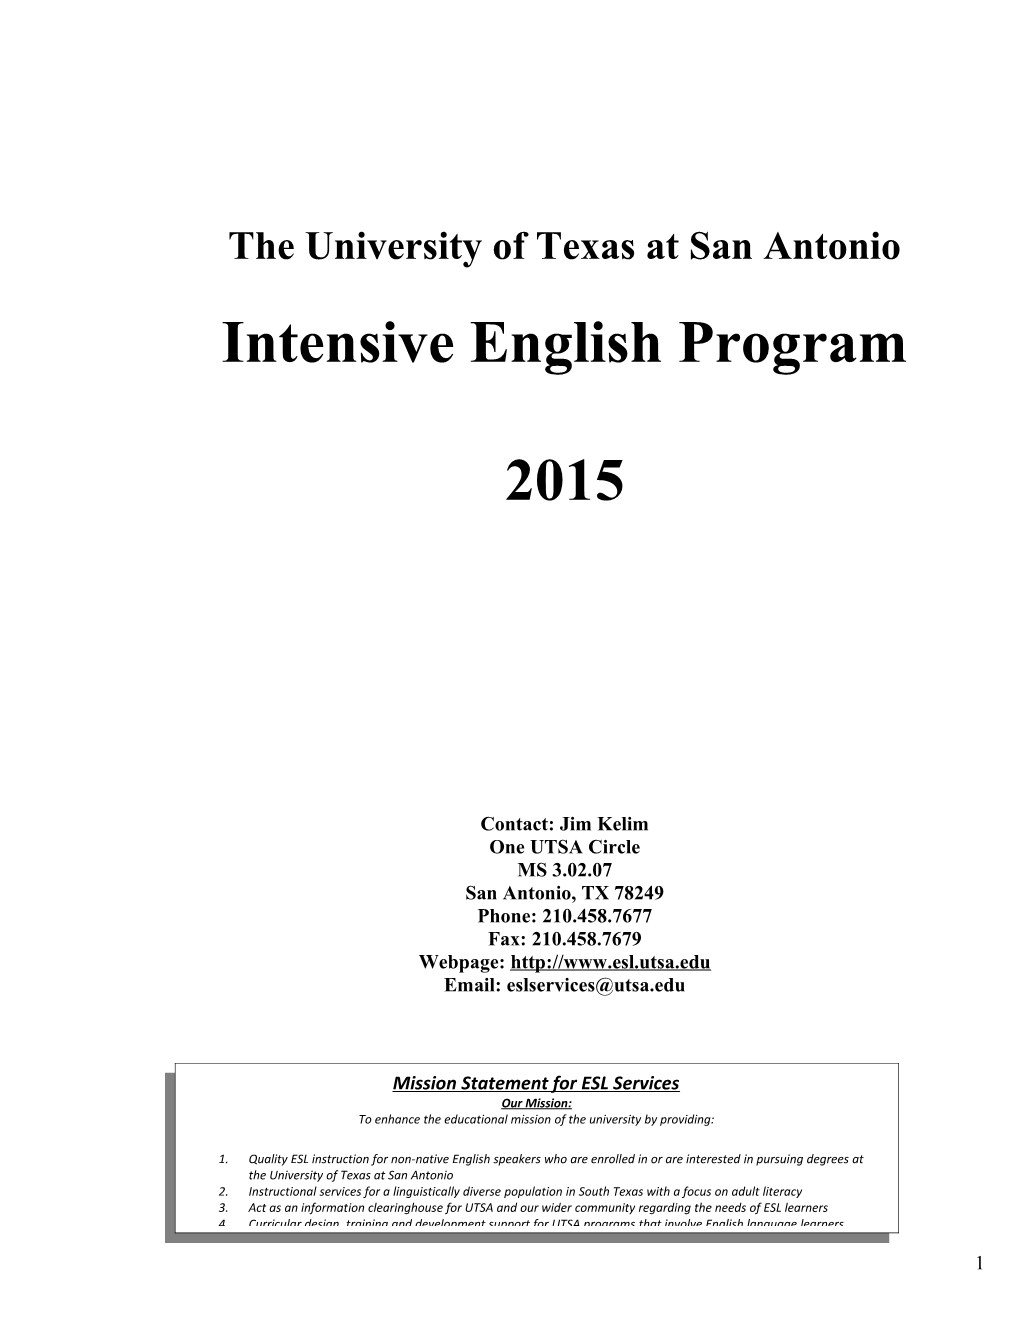 Intensive English Language Program Application